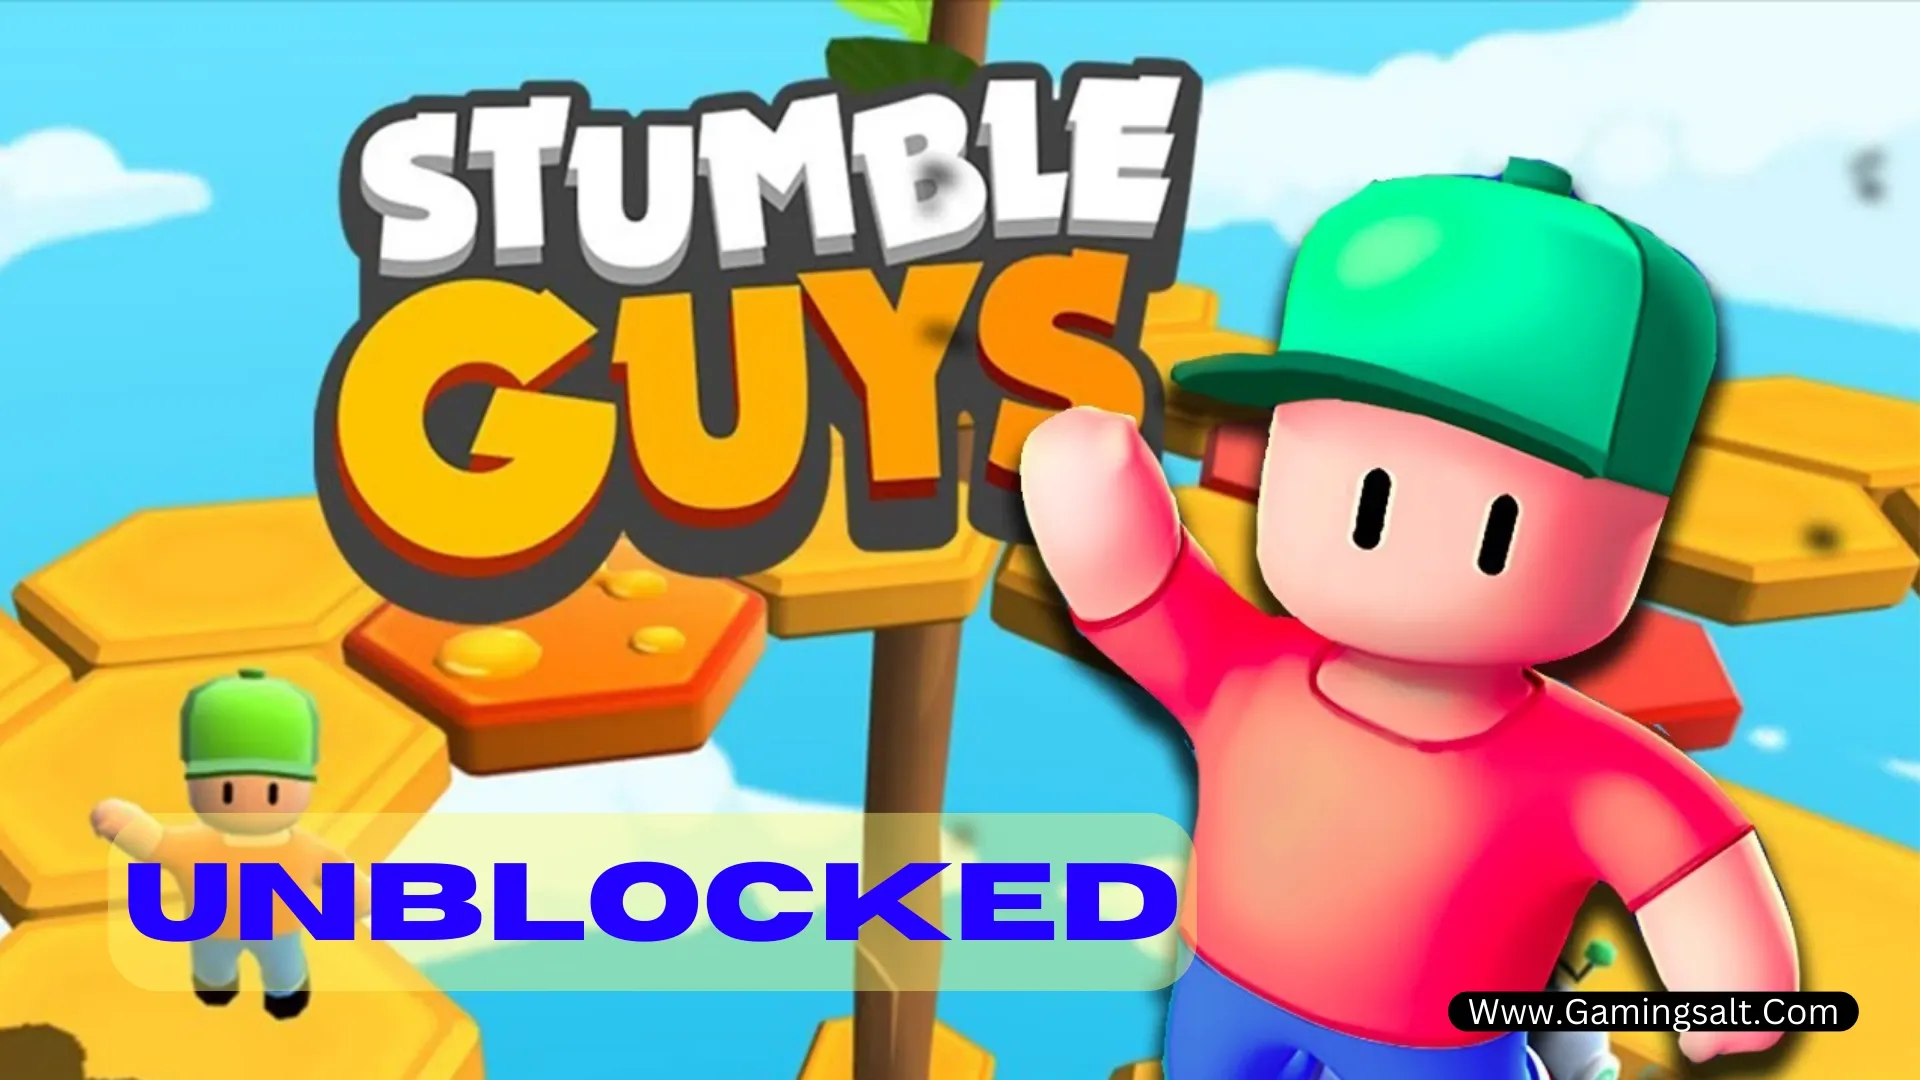 Stumble Guys Unblocked